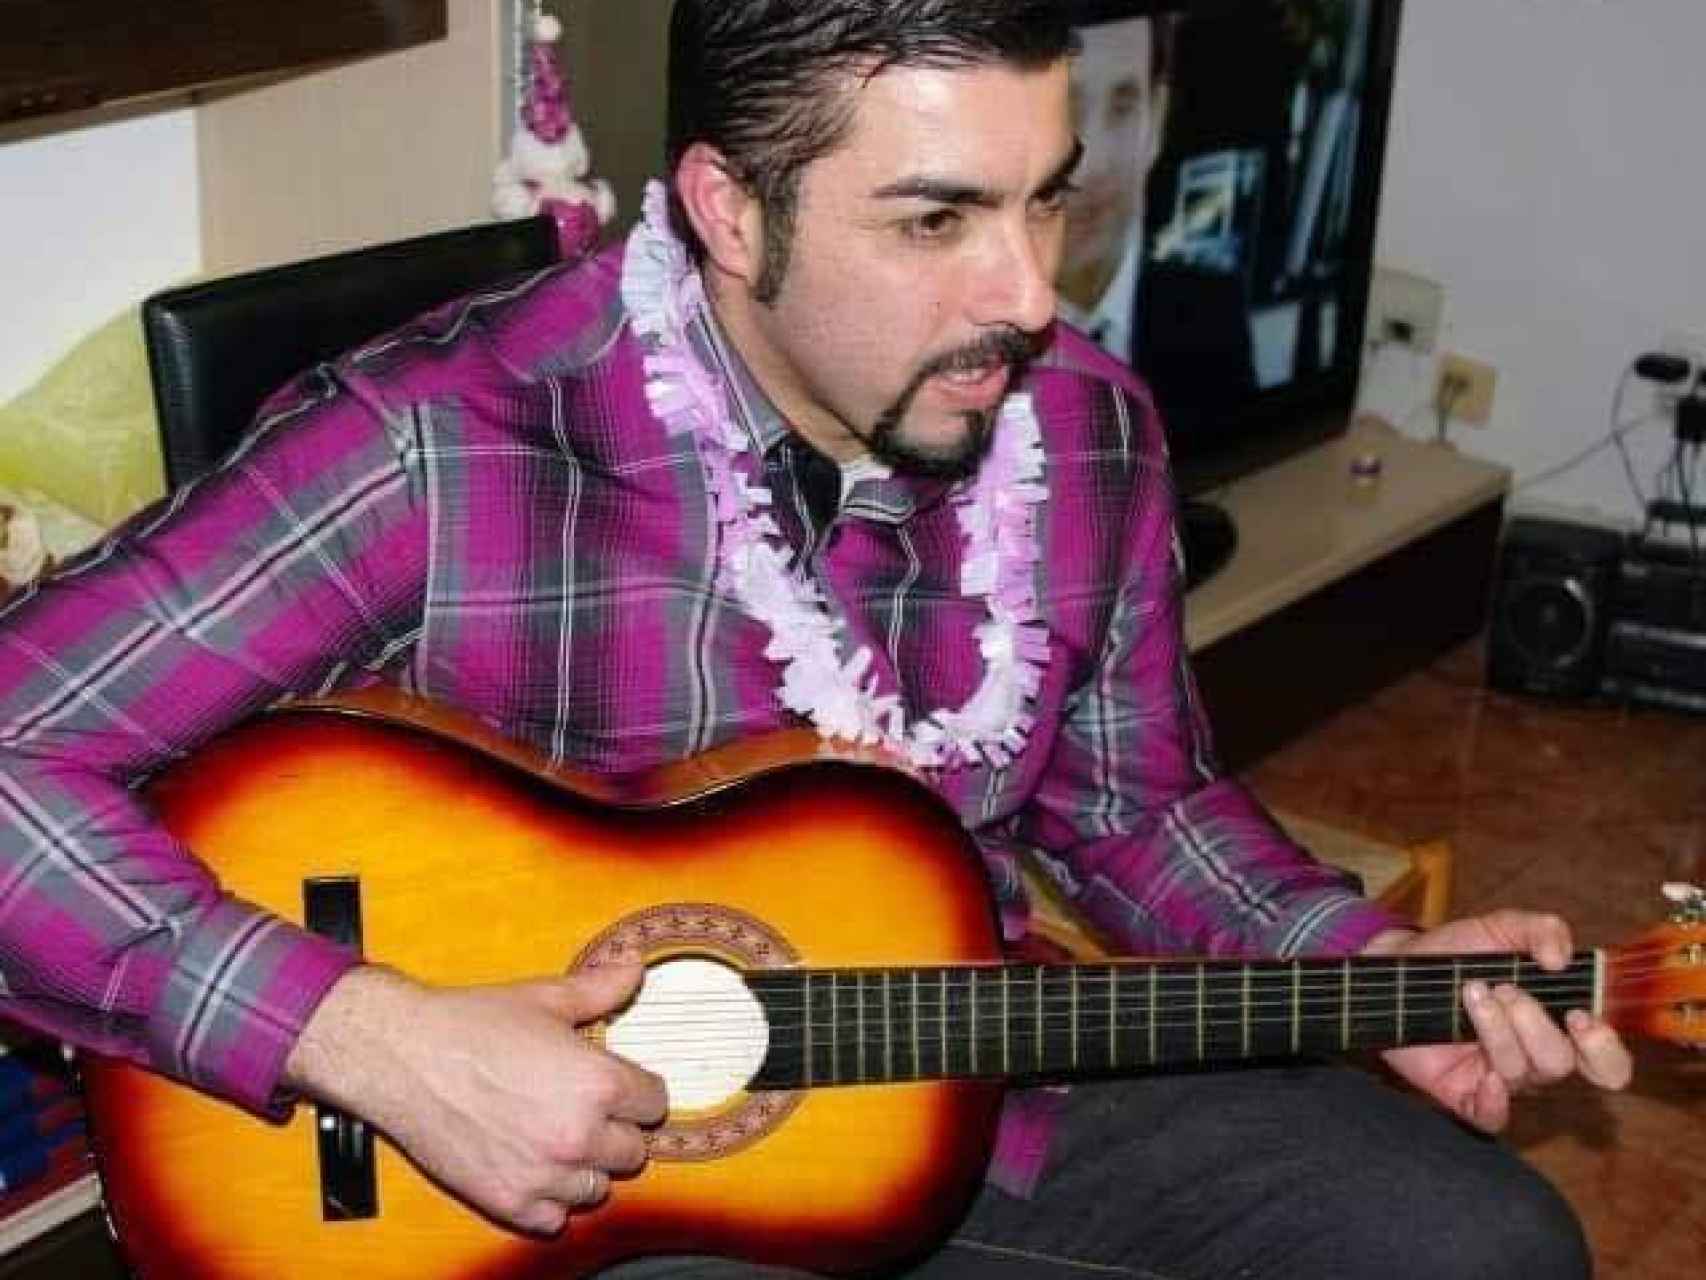 El presunto asesino de Sacramento, tocando la guitarra